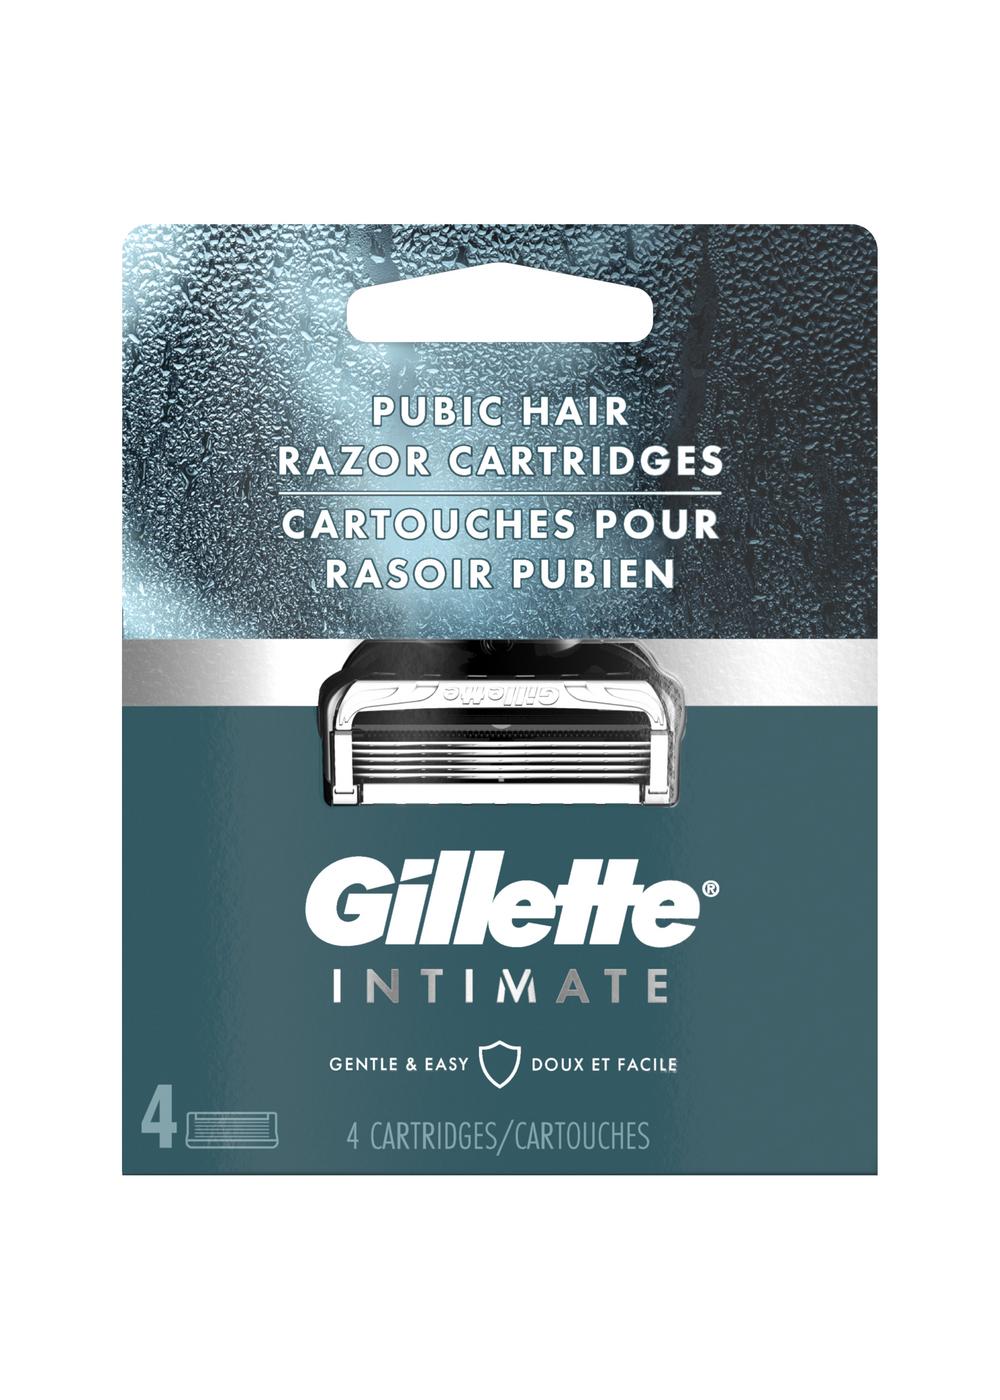 Gillette Intimate Pubic Hair Razor Cartridges; image 1 of 10